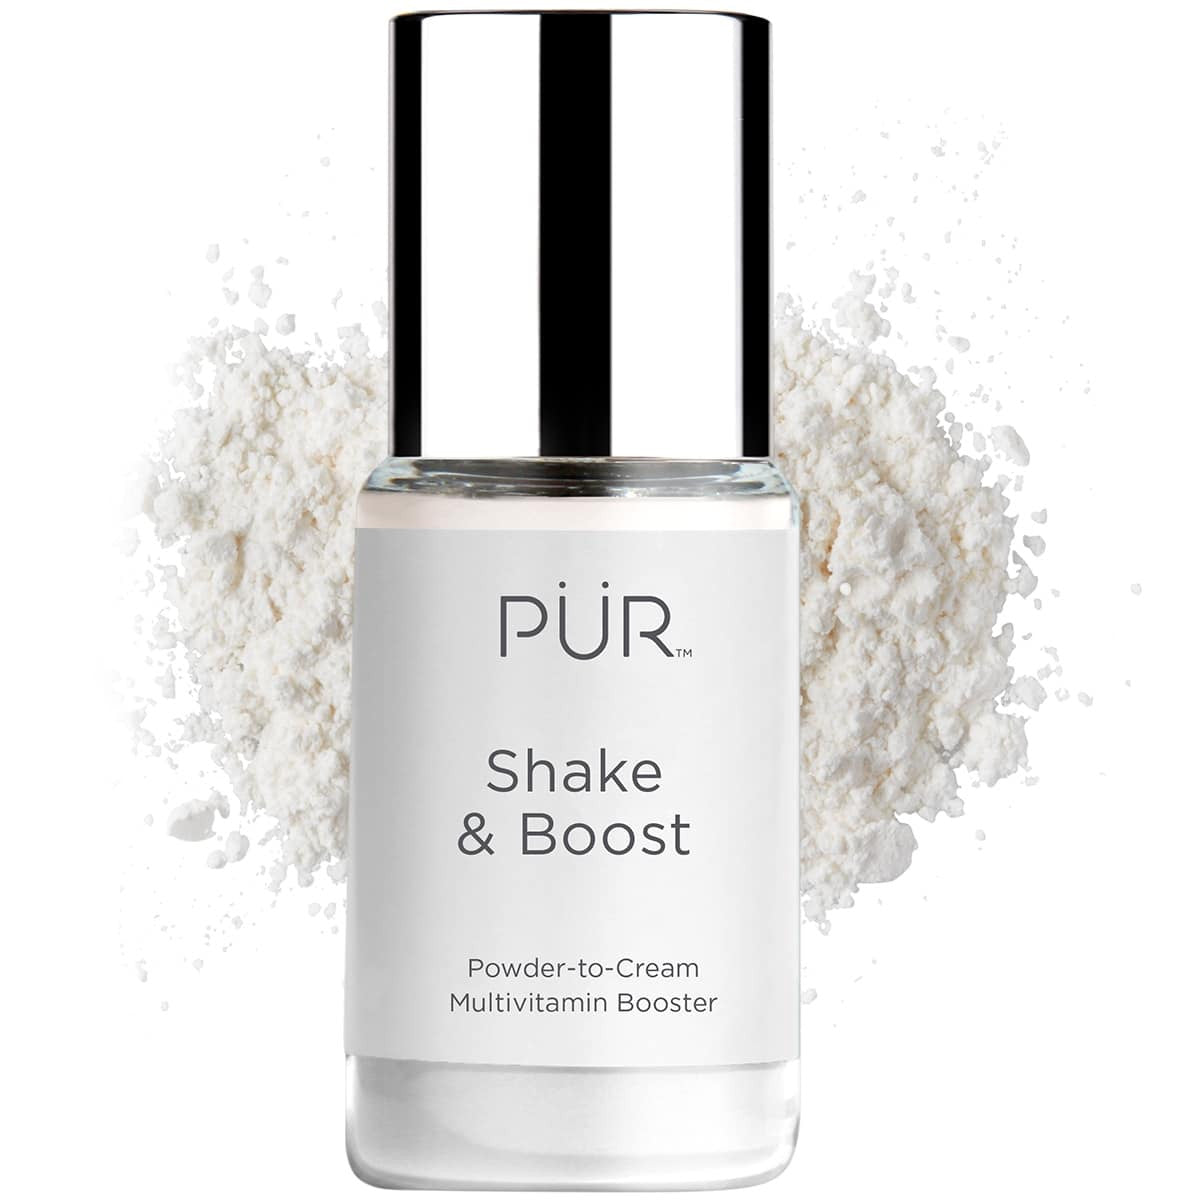 PUR Shake & Boost Powder-to-Cream Multivitamin Boost